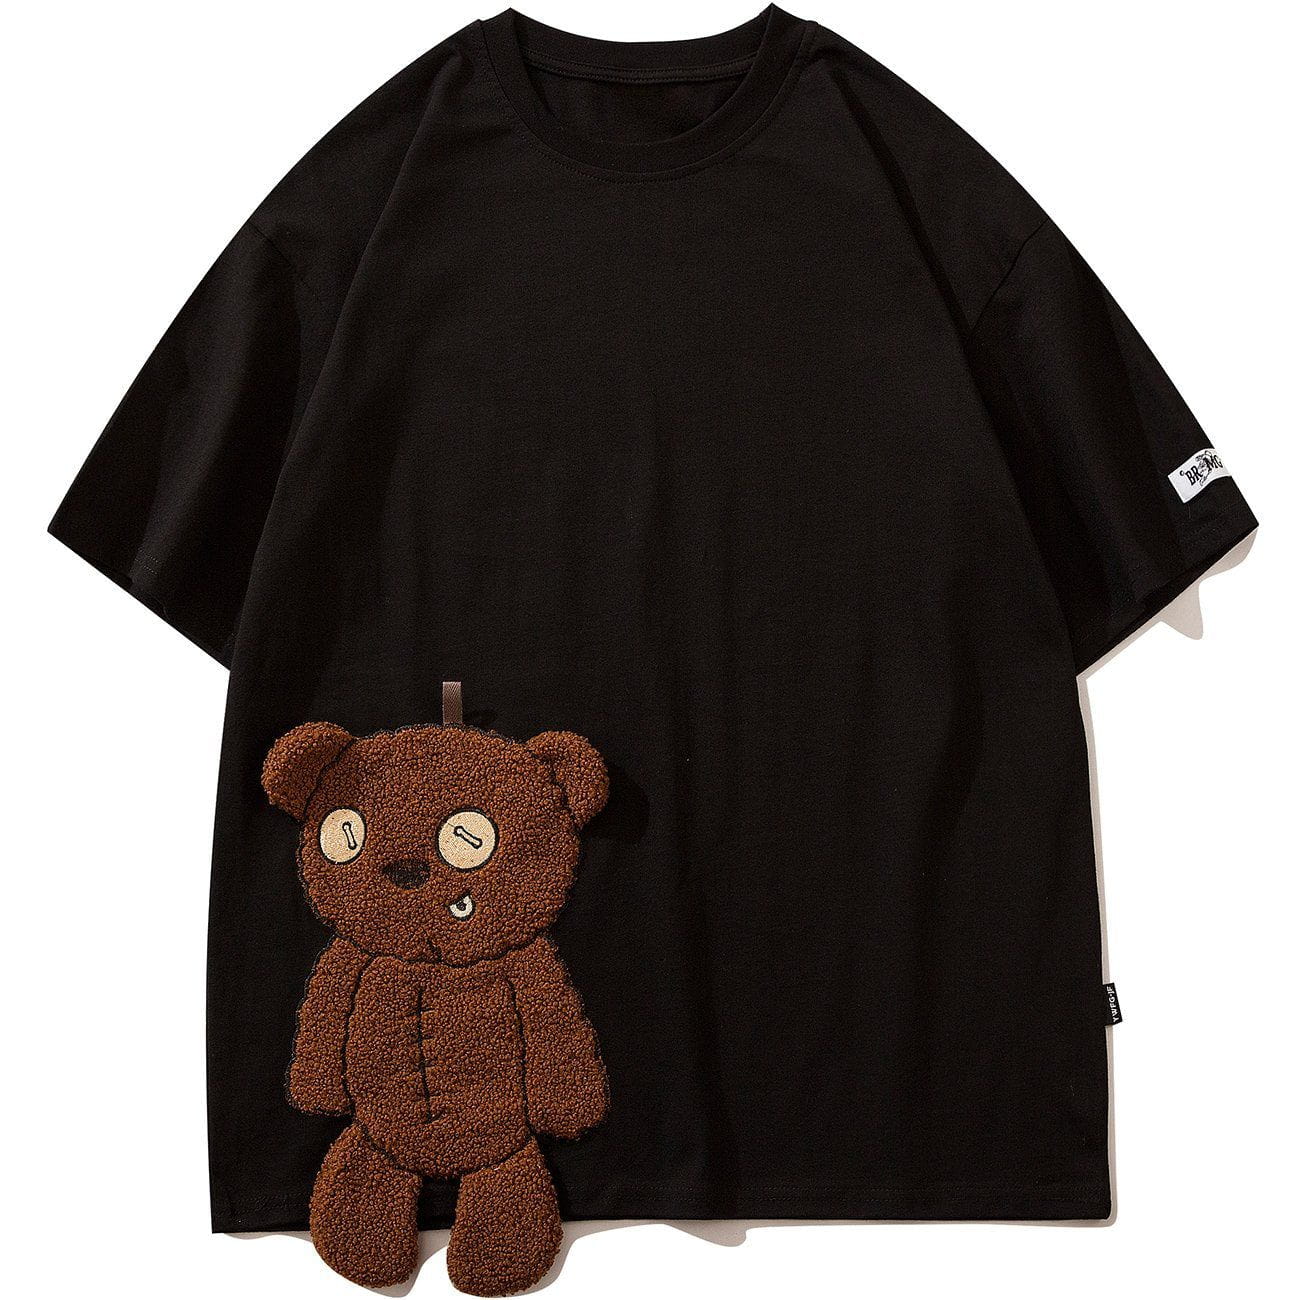 Dementia Bear Embroidered T-Shirt